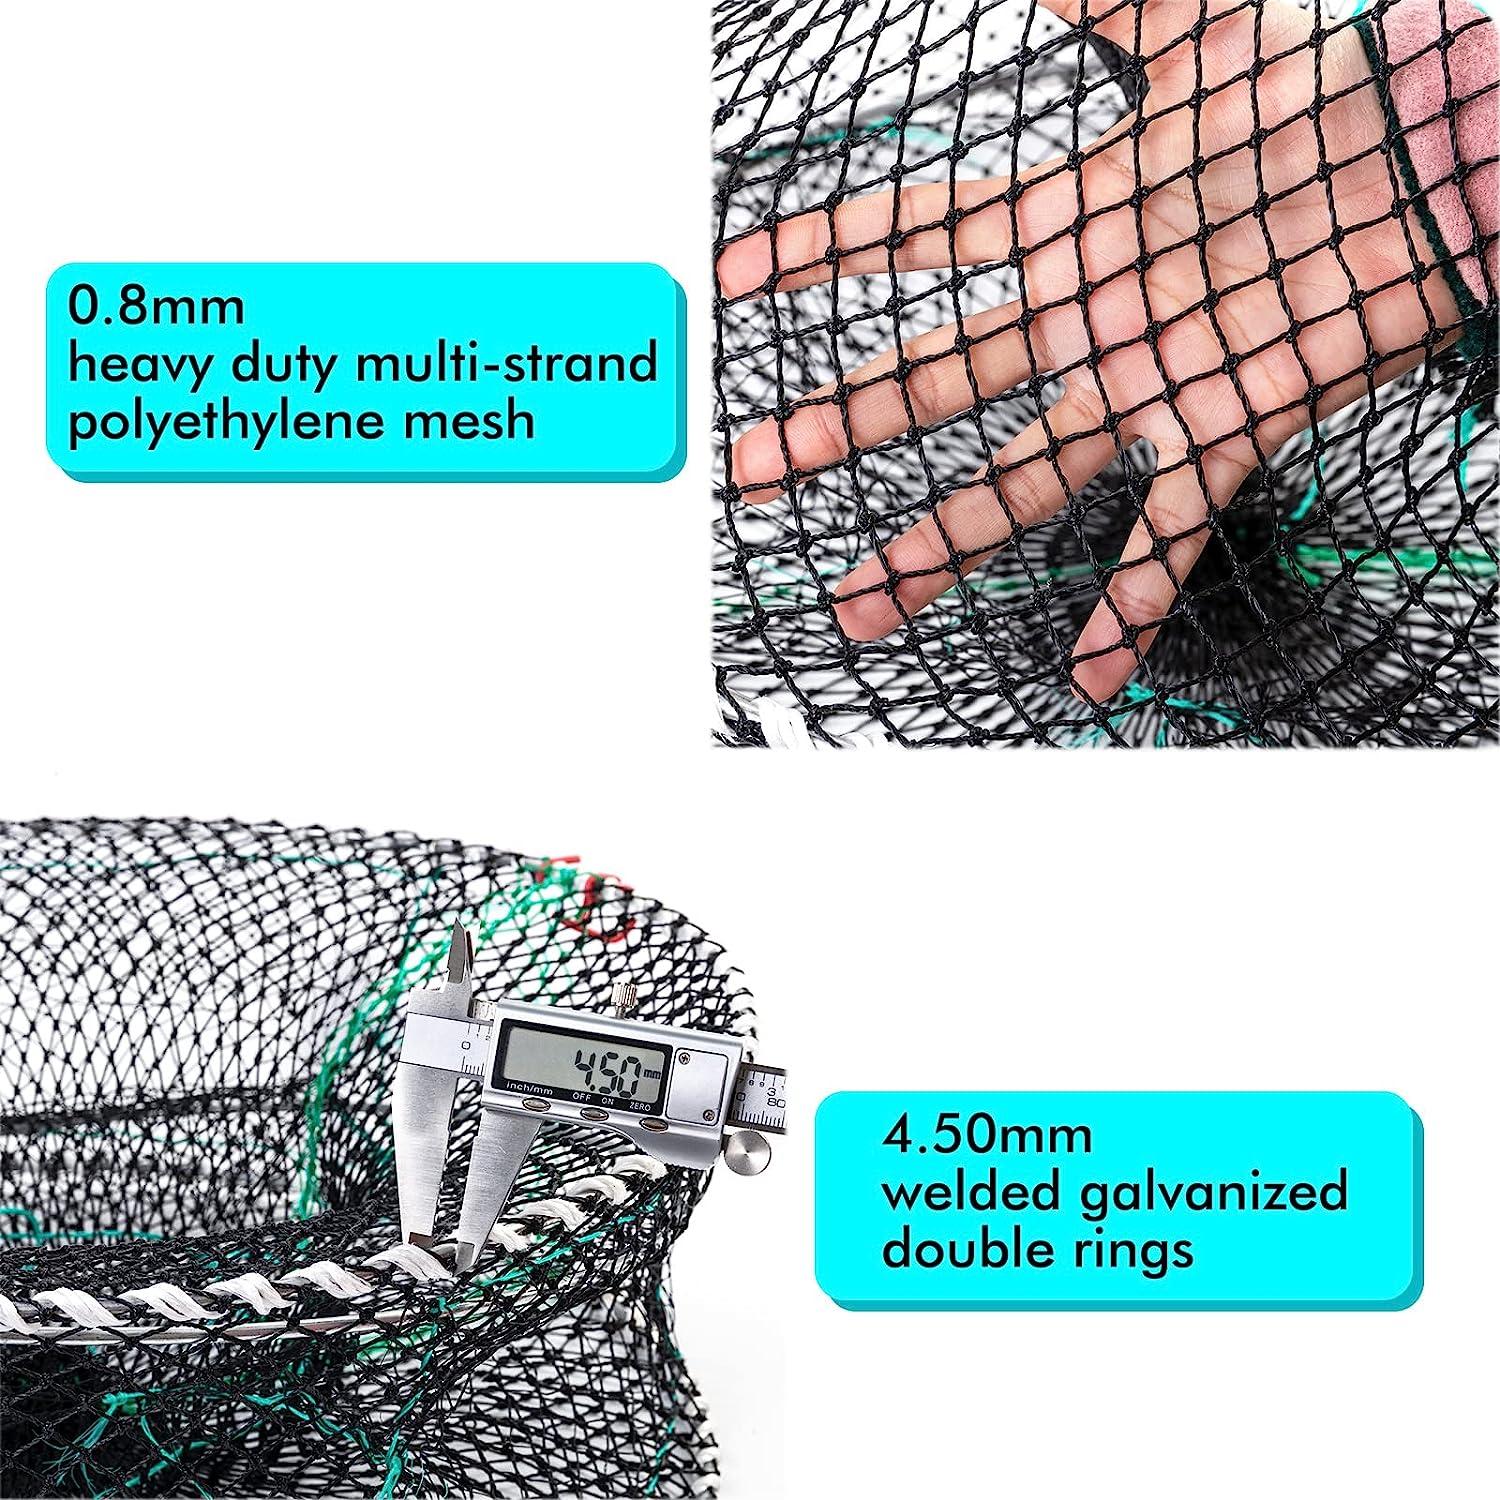 1pcs Outdoor Semi-automatic Folding Fishing Net